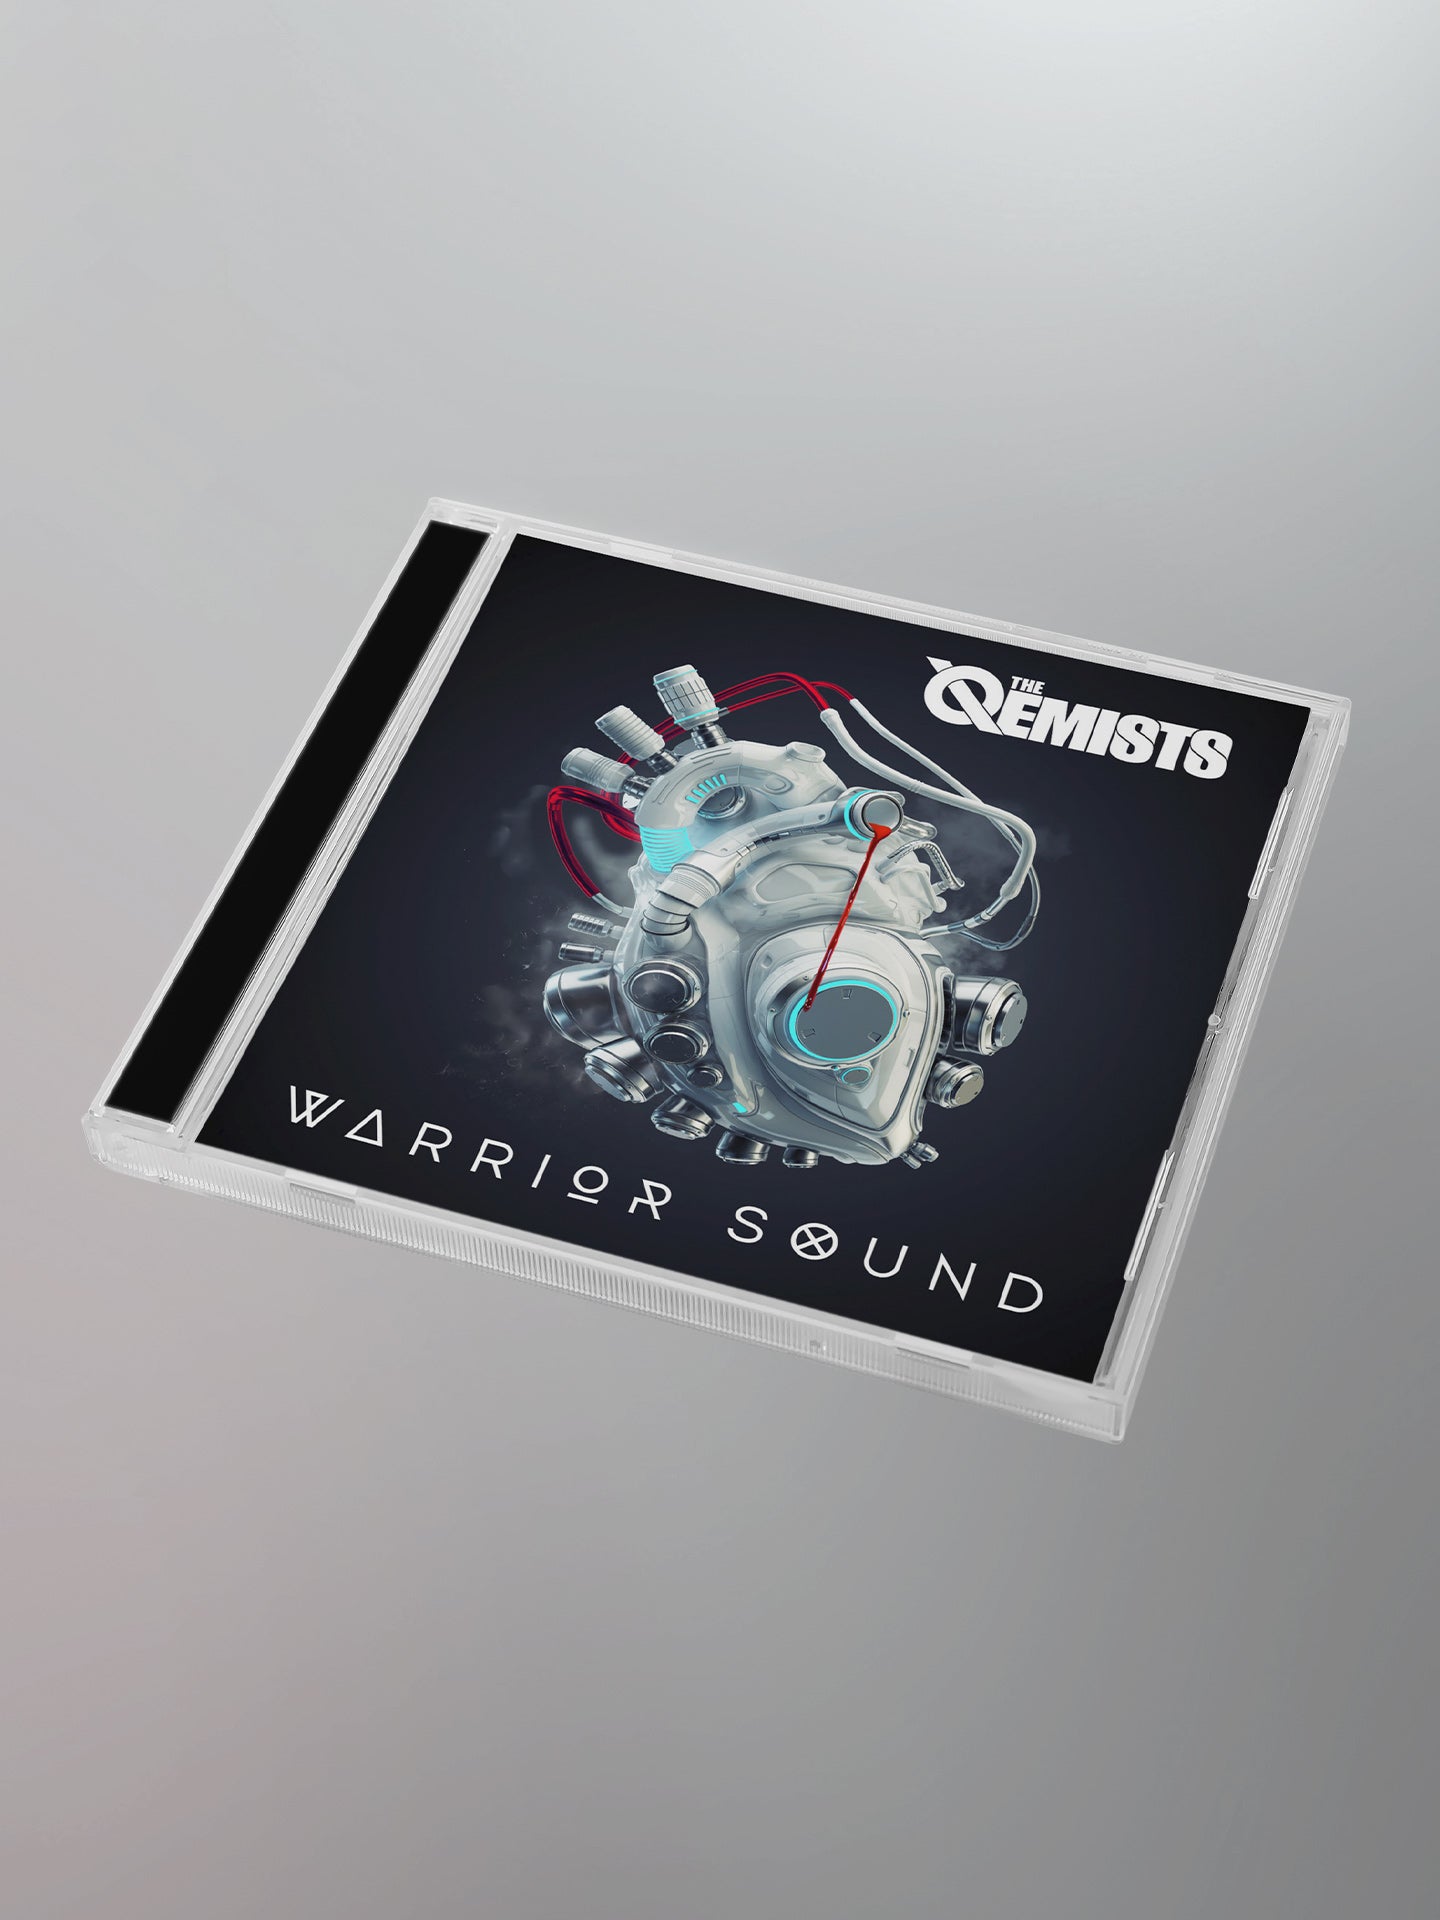 The Qemists - Warrior Sound CD